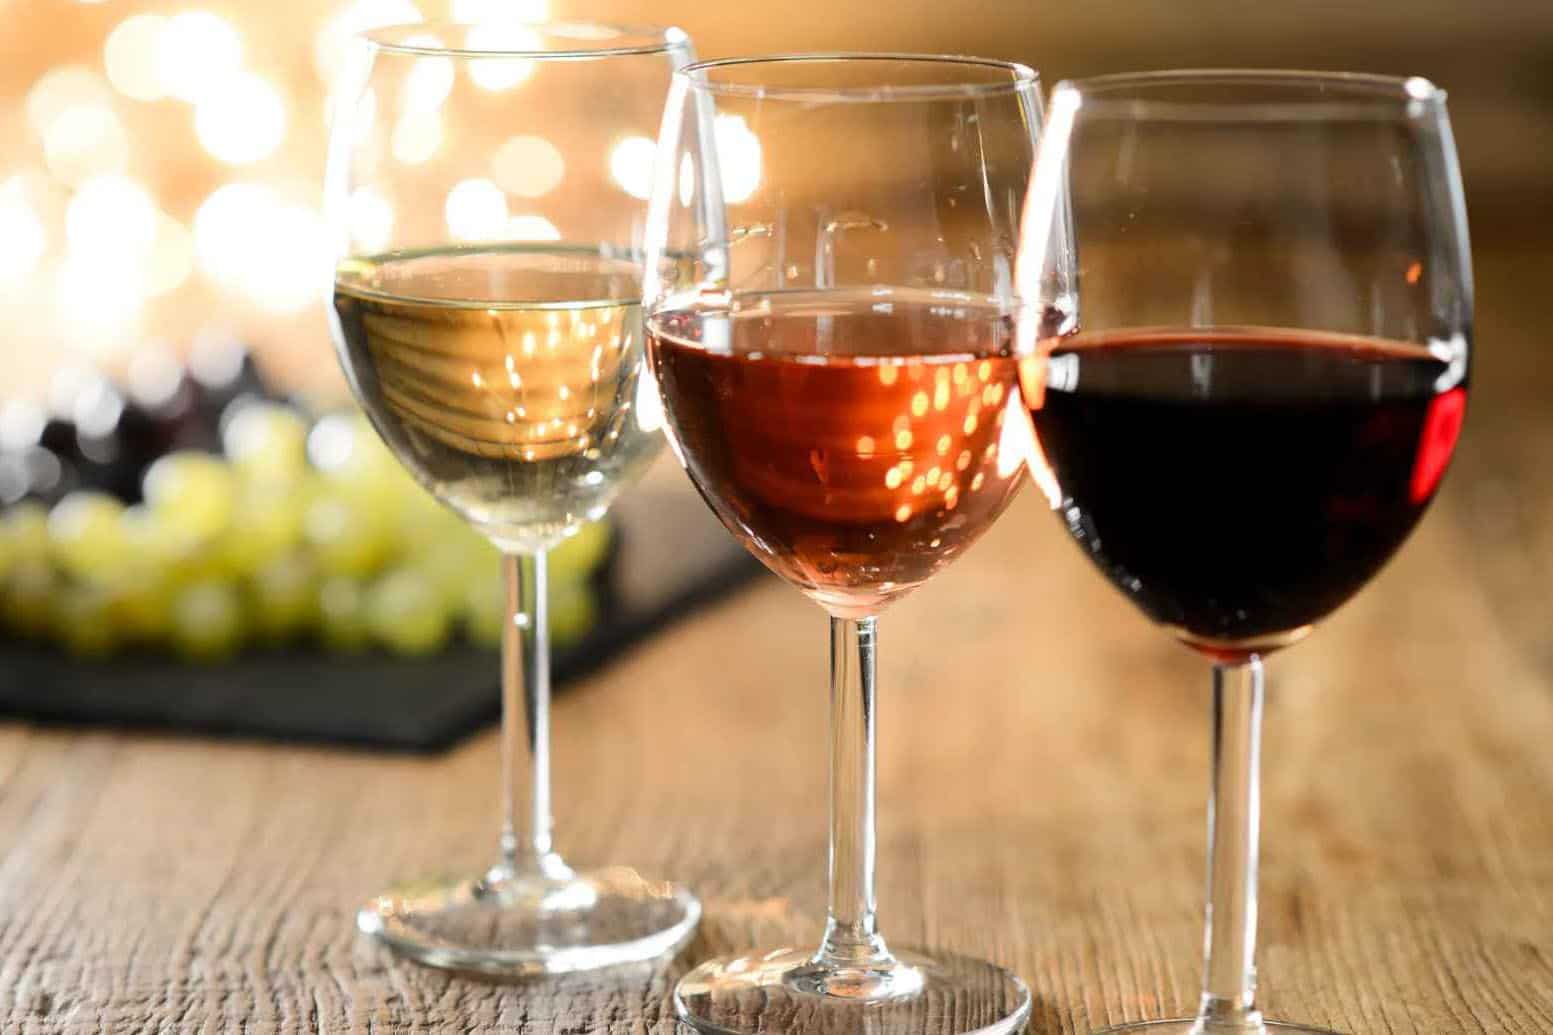 Average Alcohol Content in Wine